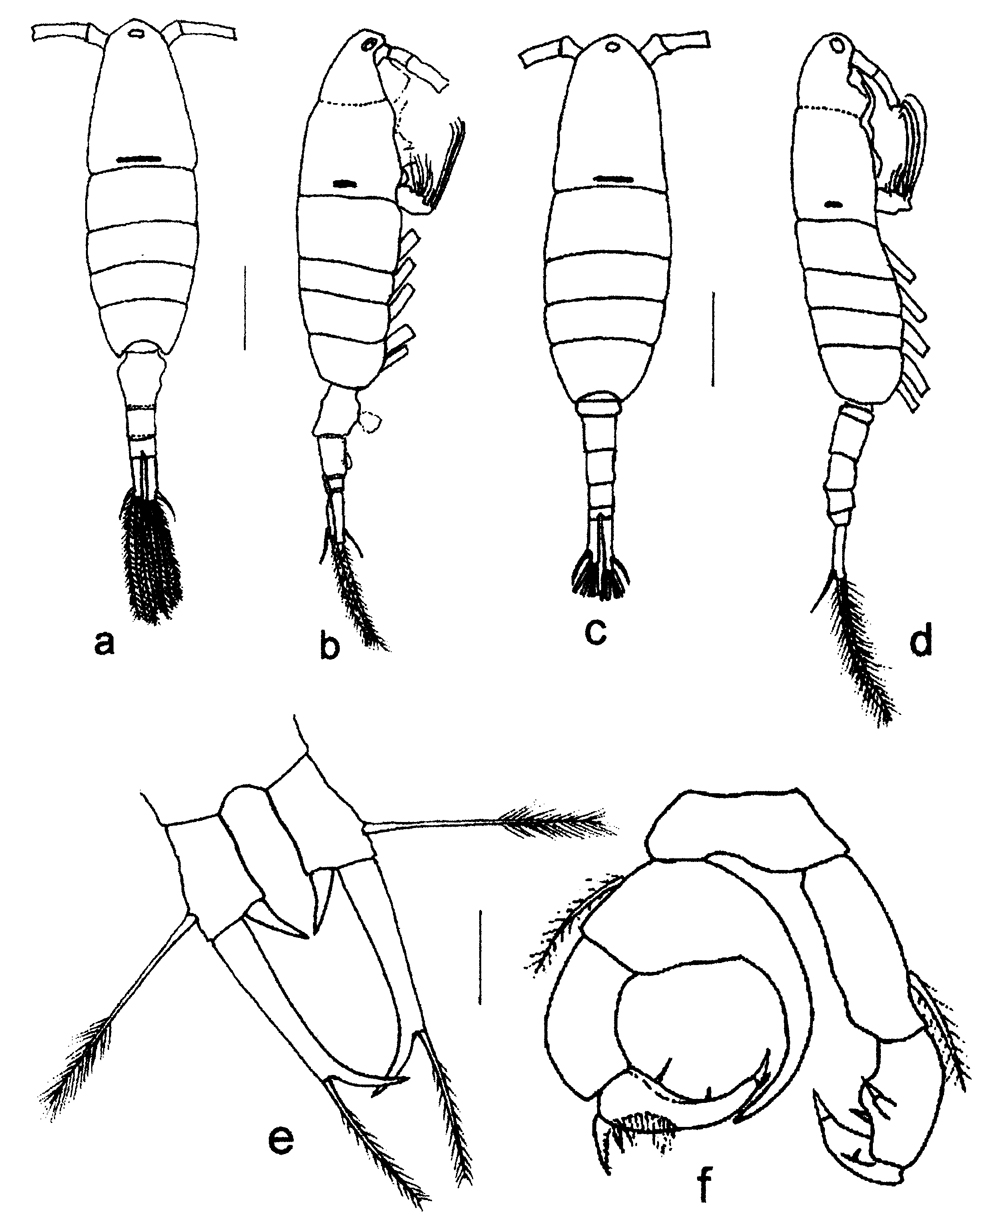 Species Acartiella faoensis - Plate 6 of morphological figures